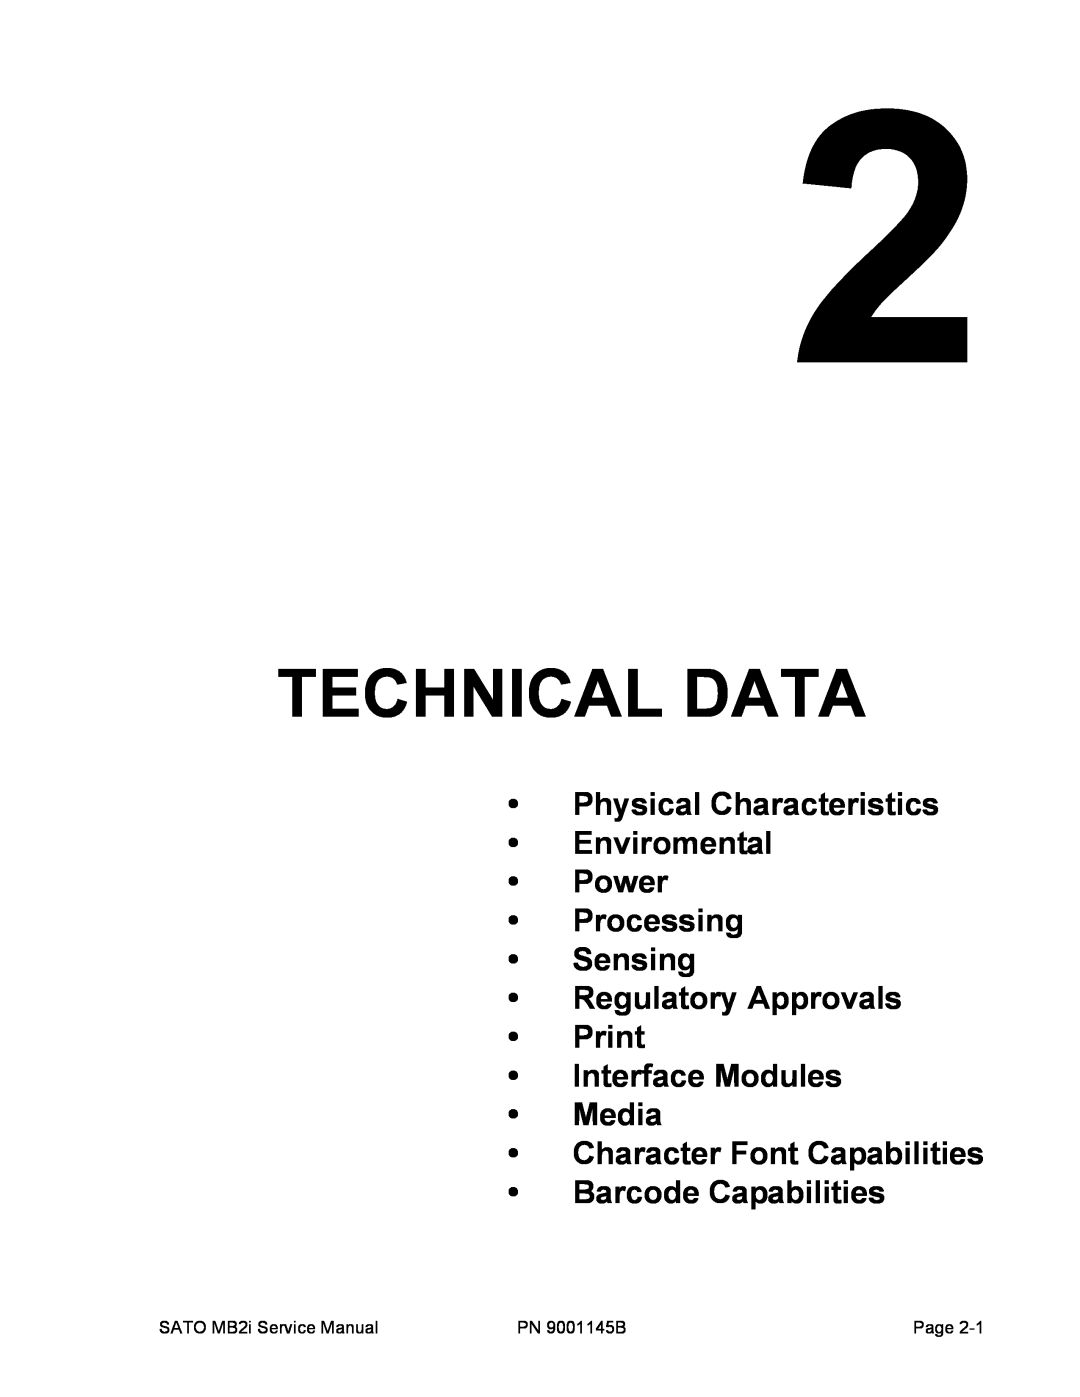 SATO 200i manual Technical Data, Physical Characteristics Enviromental Power Processing Sensing 